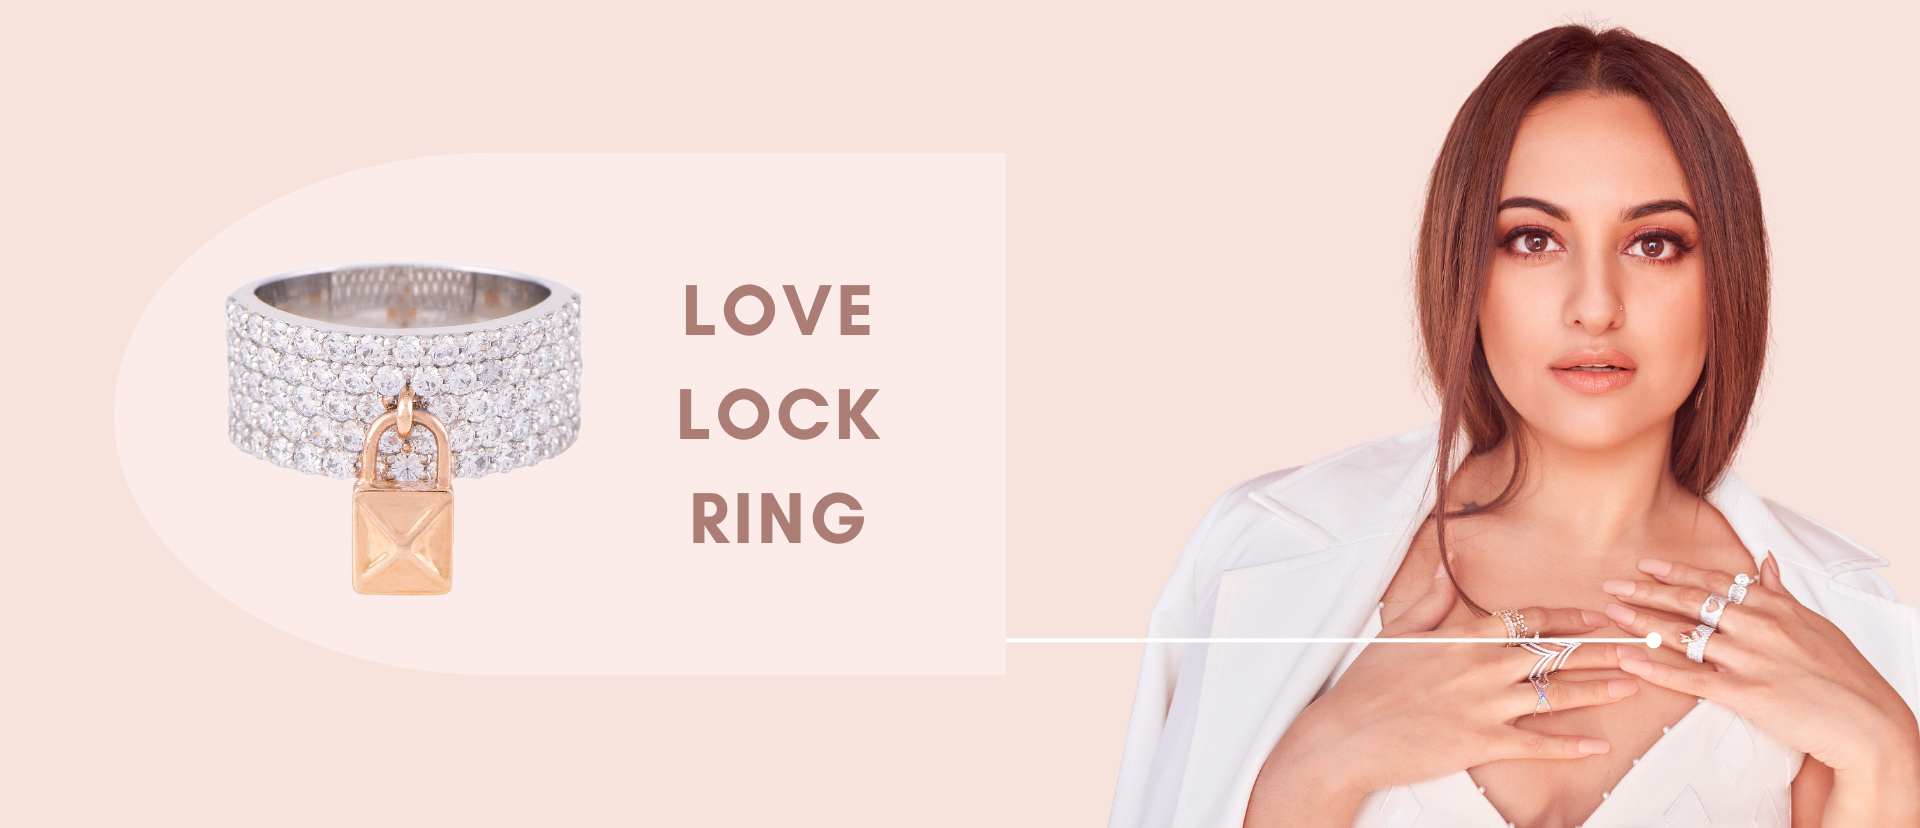  BannerLove Lock Ring